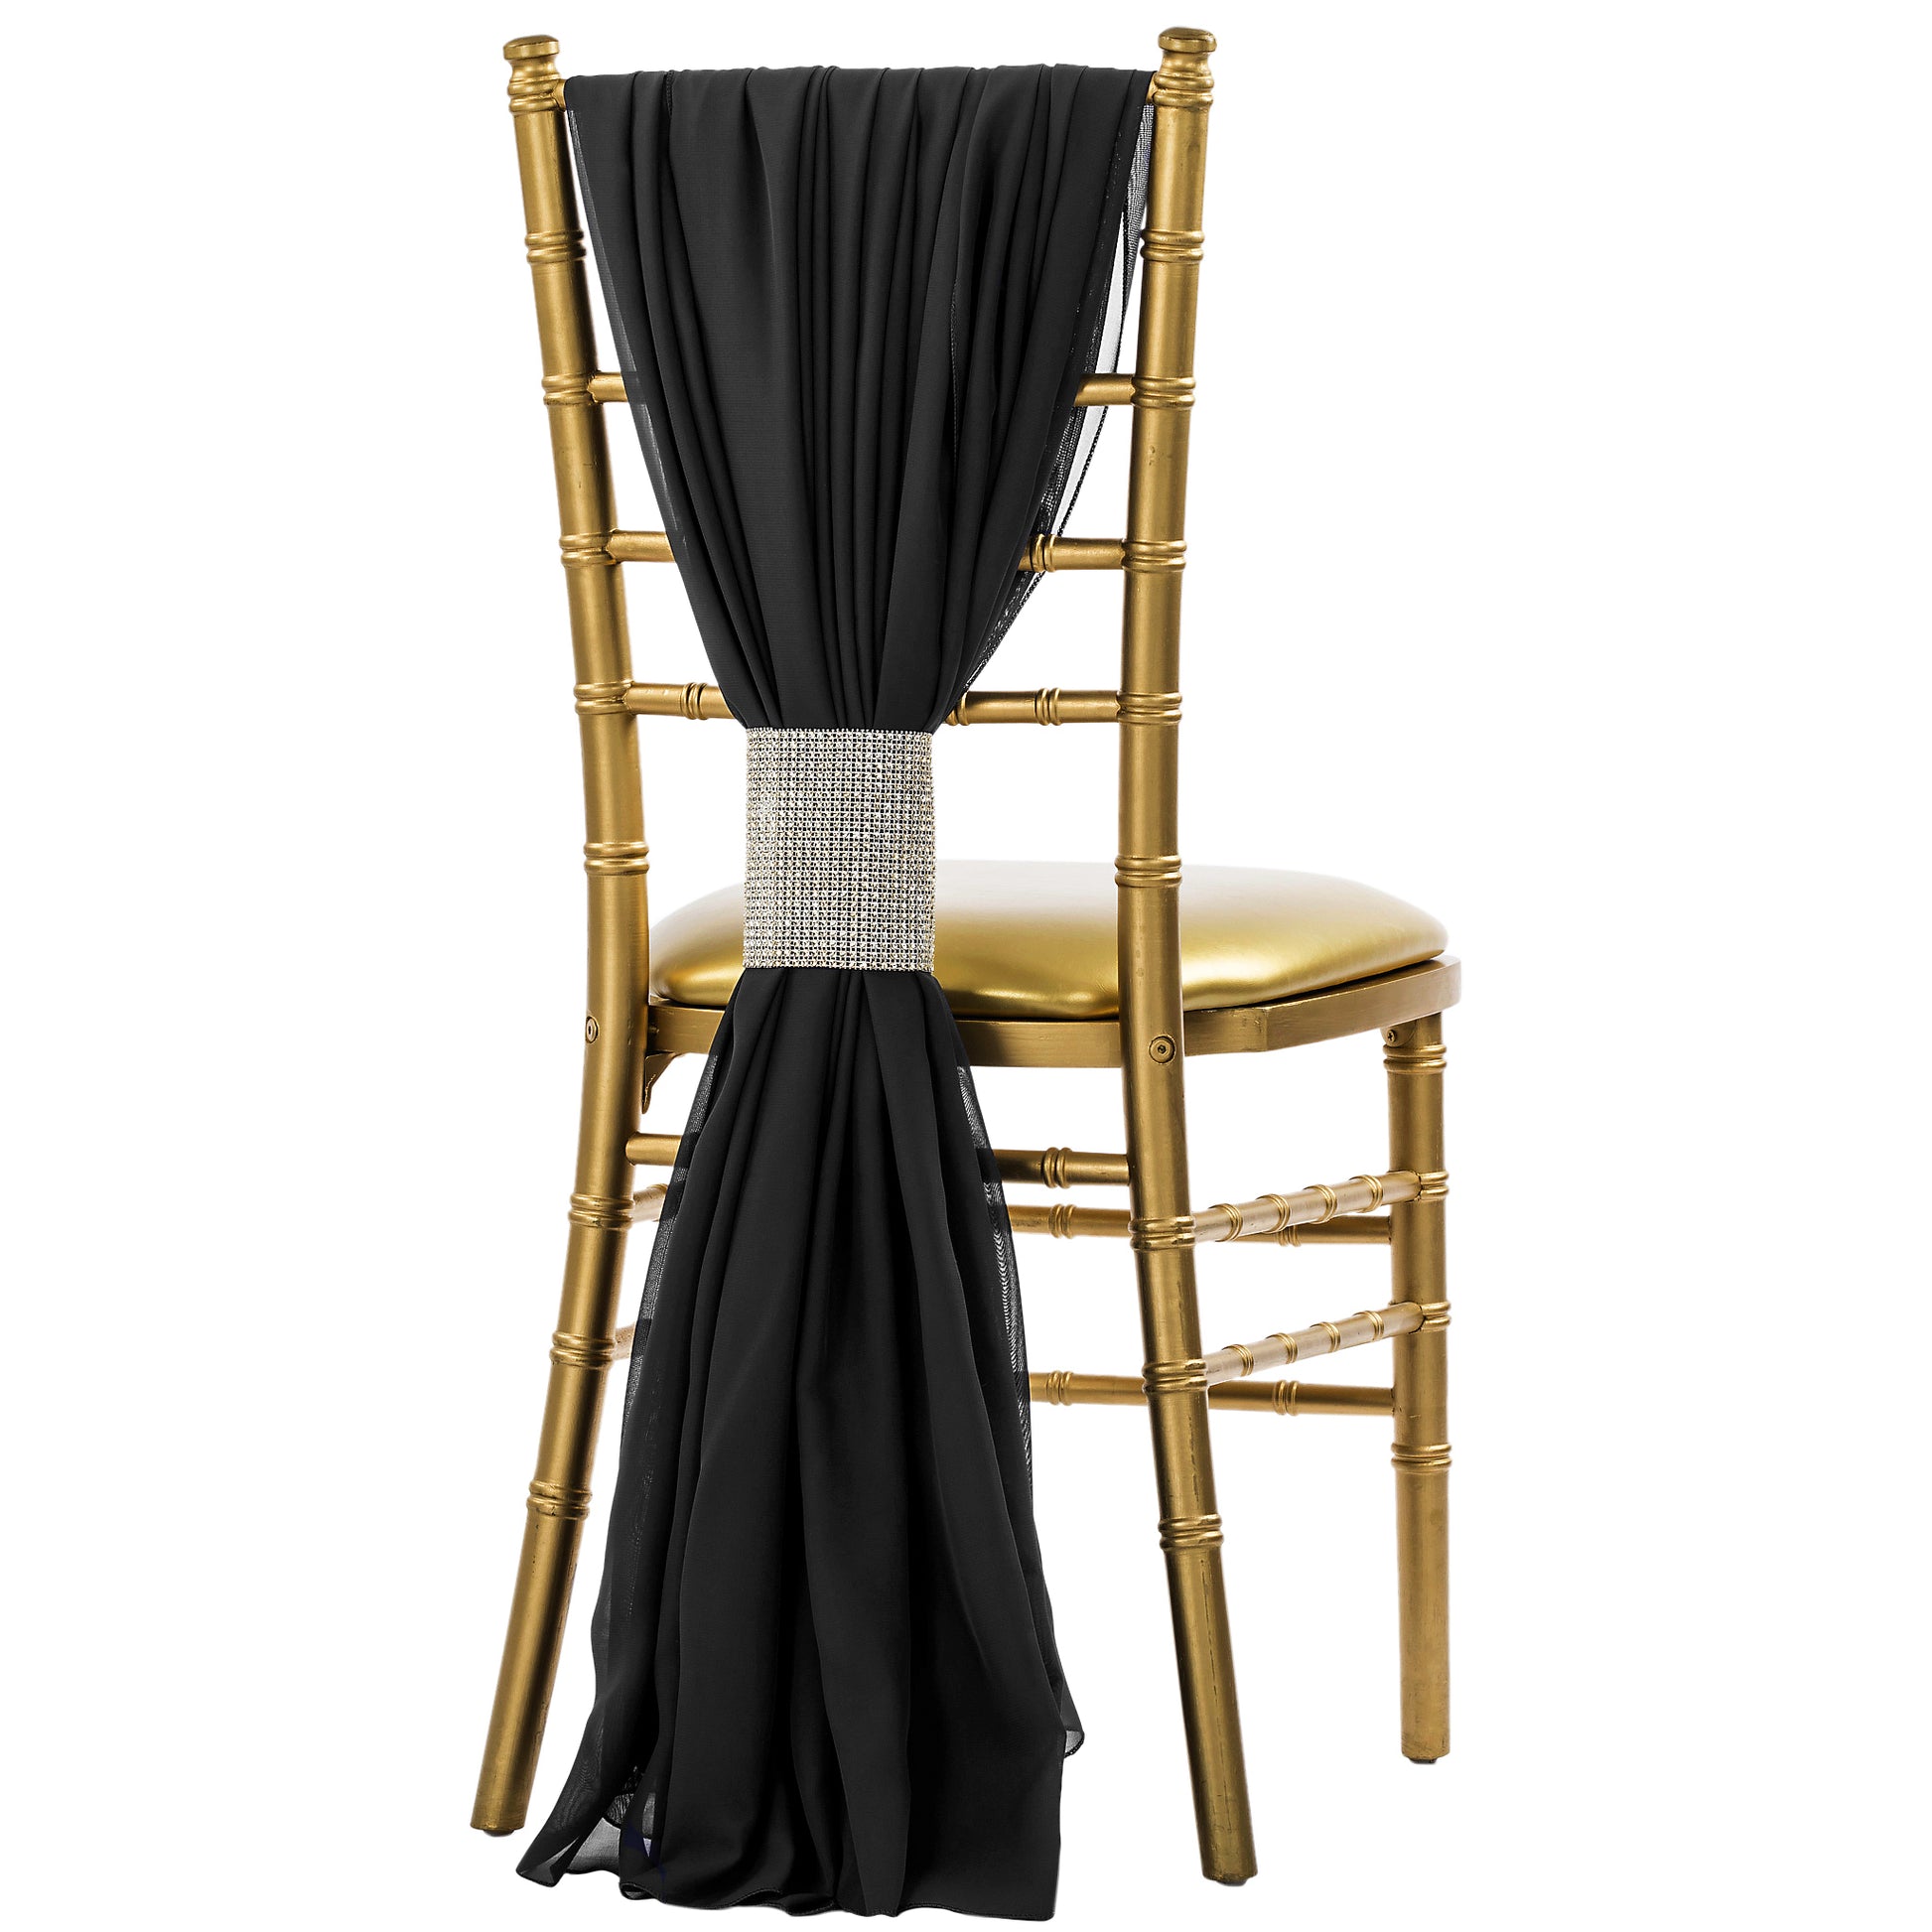 5pcs Pack of Chiffon Chair Sashes/Ties - Black - CV Linens